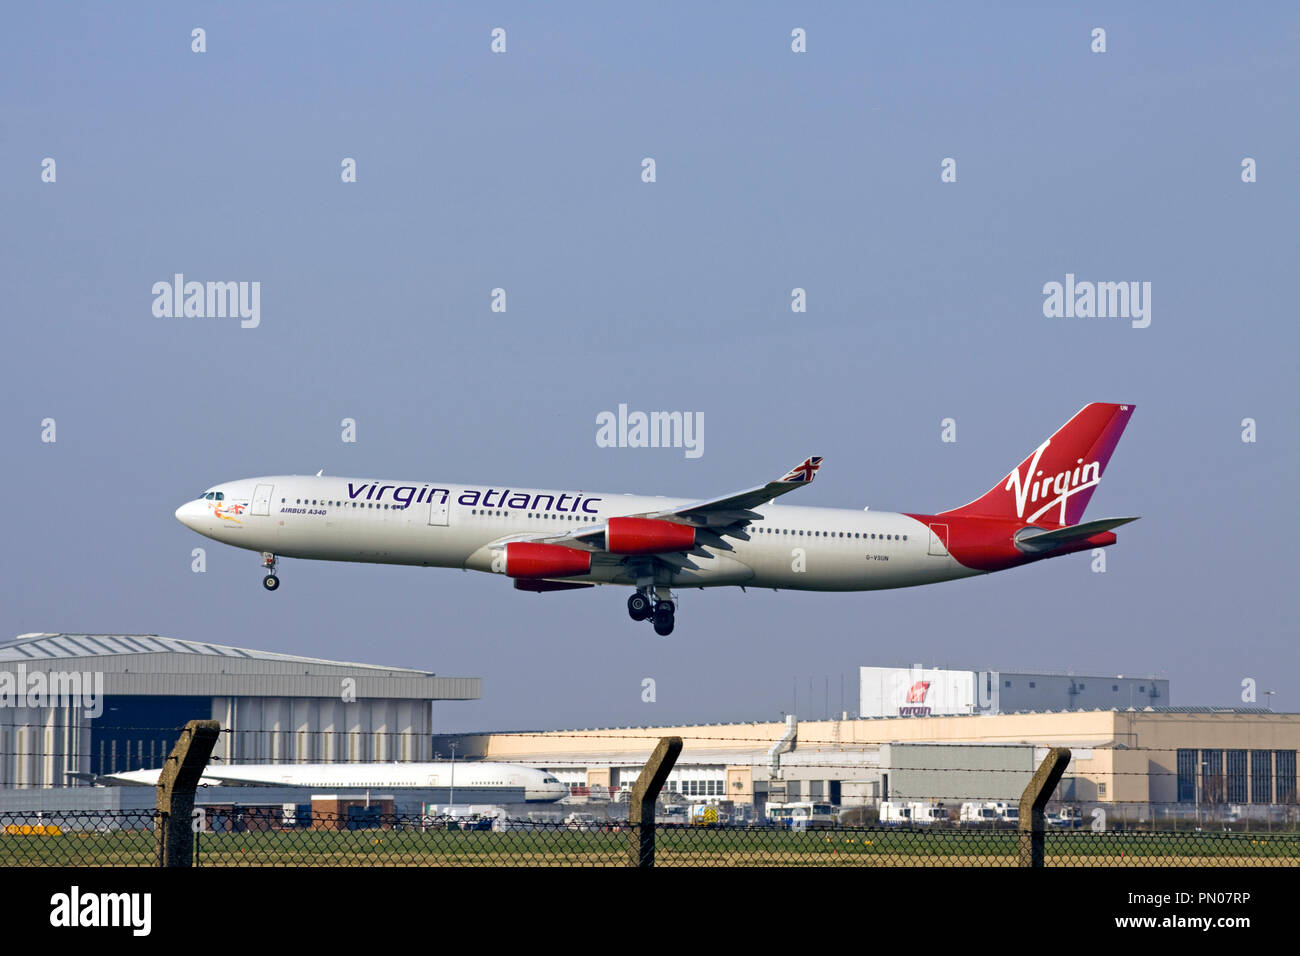 Virgin Atlantic Airways Airbus A340-313 aircraft landing at London Heathrow airport. Stock Photo